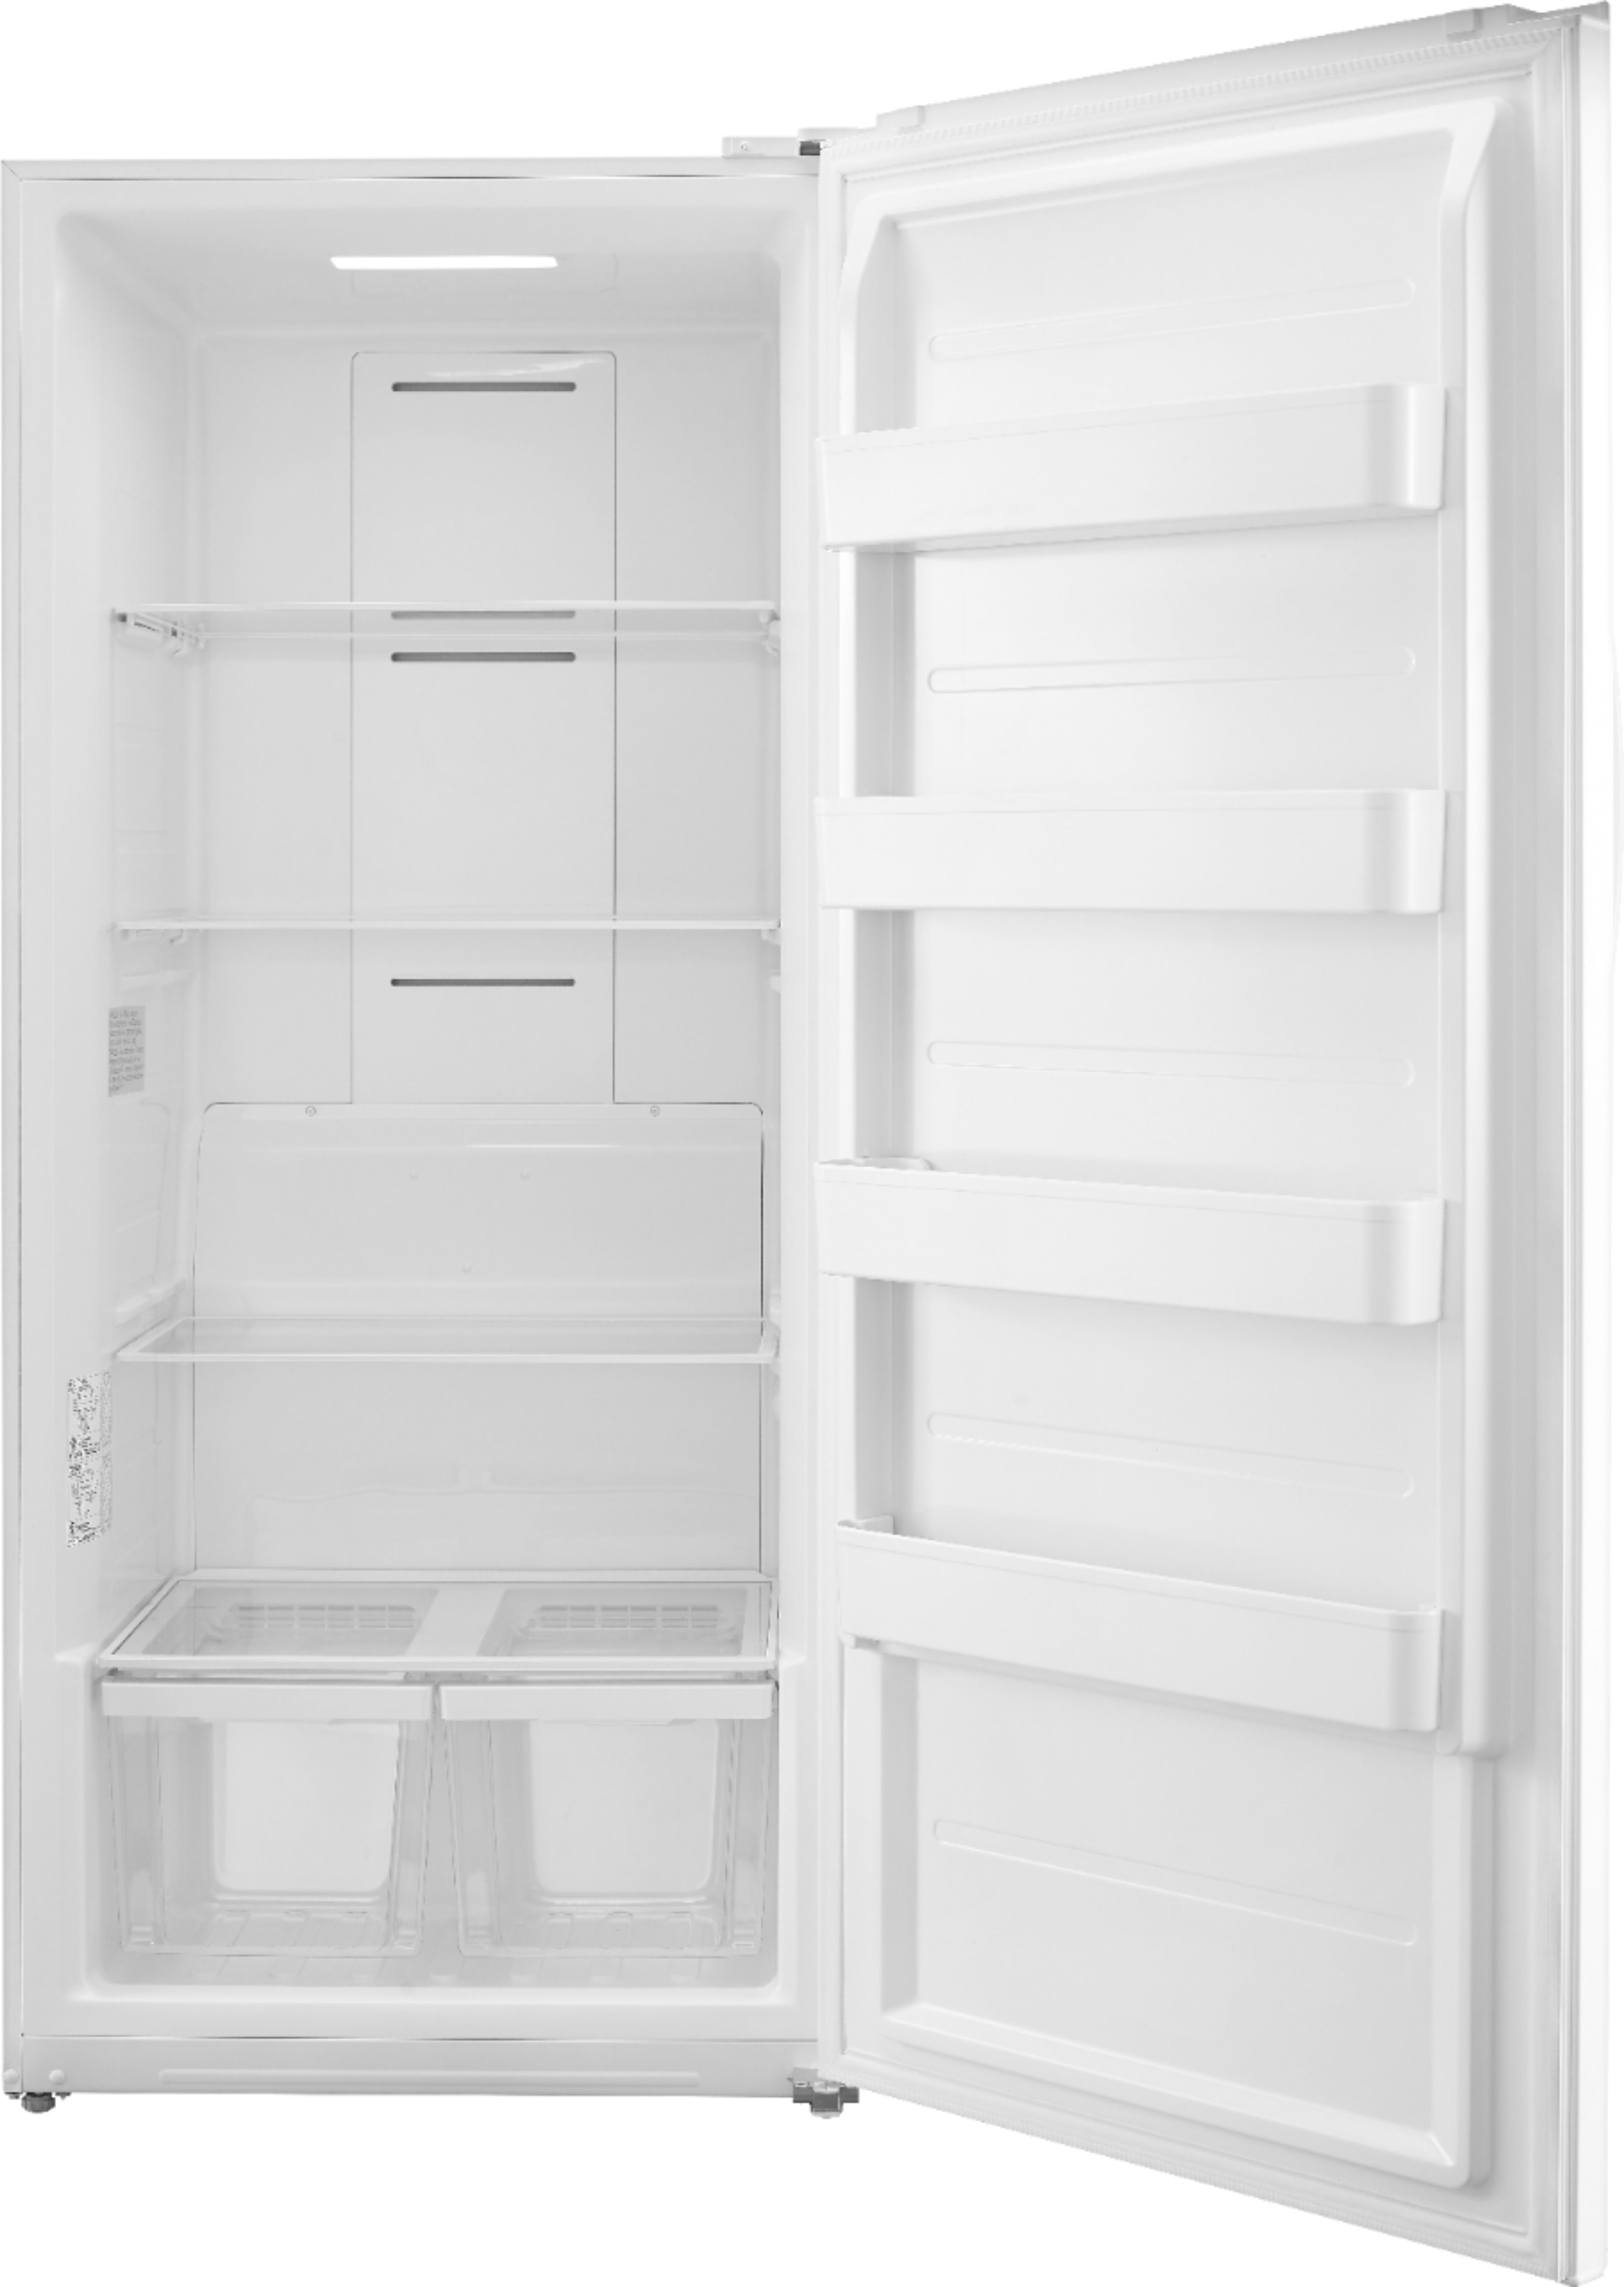 SMETA Upright Freezer Convertible Refrigerator|Freezers Garage Ready  Standup Frost-Free Fridge Deep Freezer 18 Cuft Full Size with Tempered  Glass